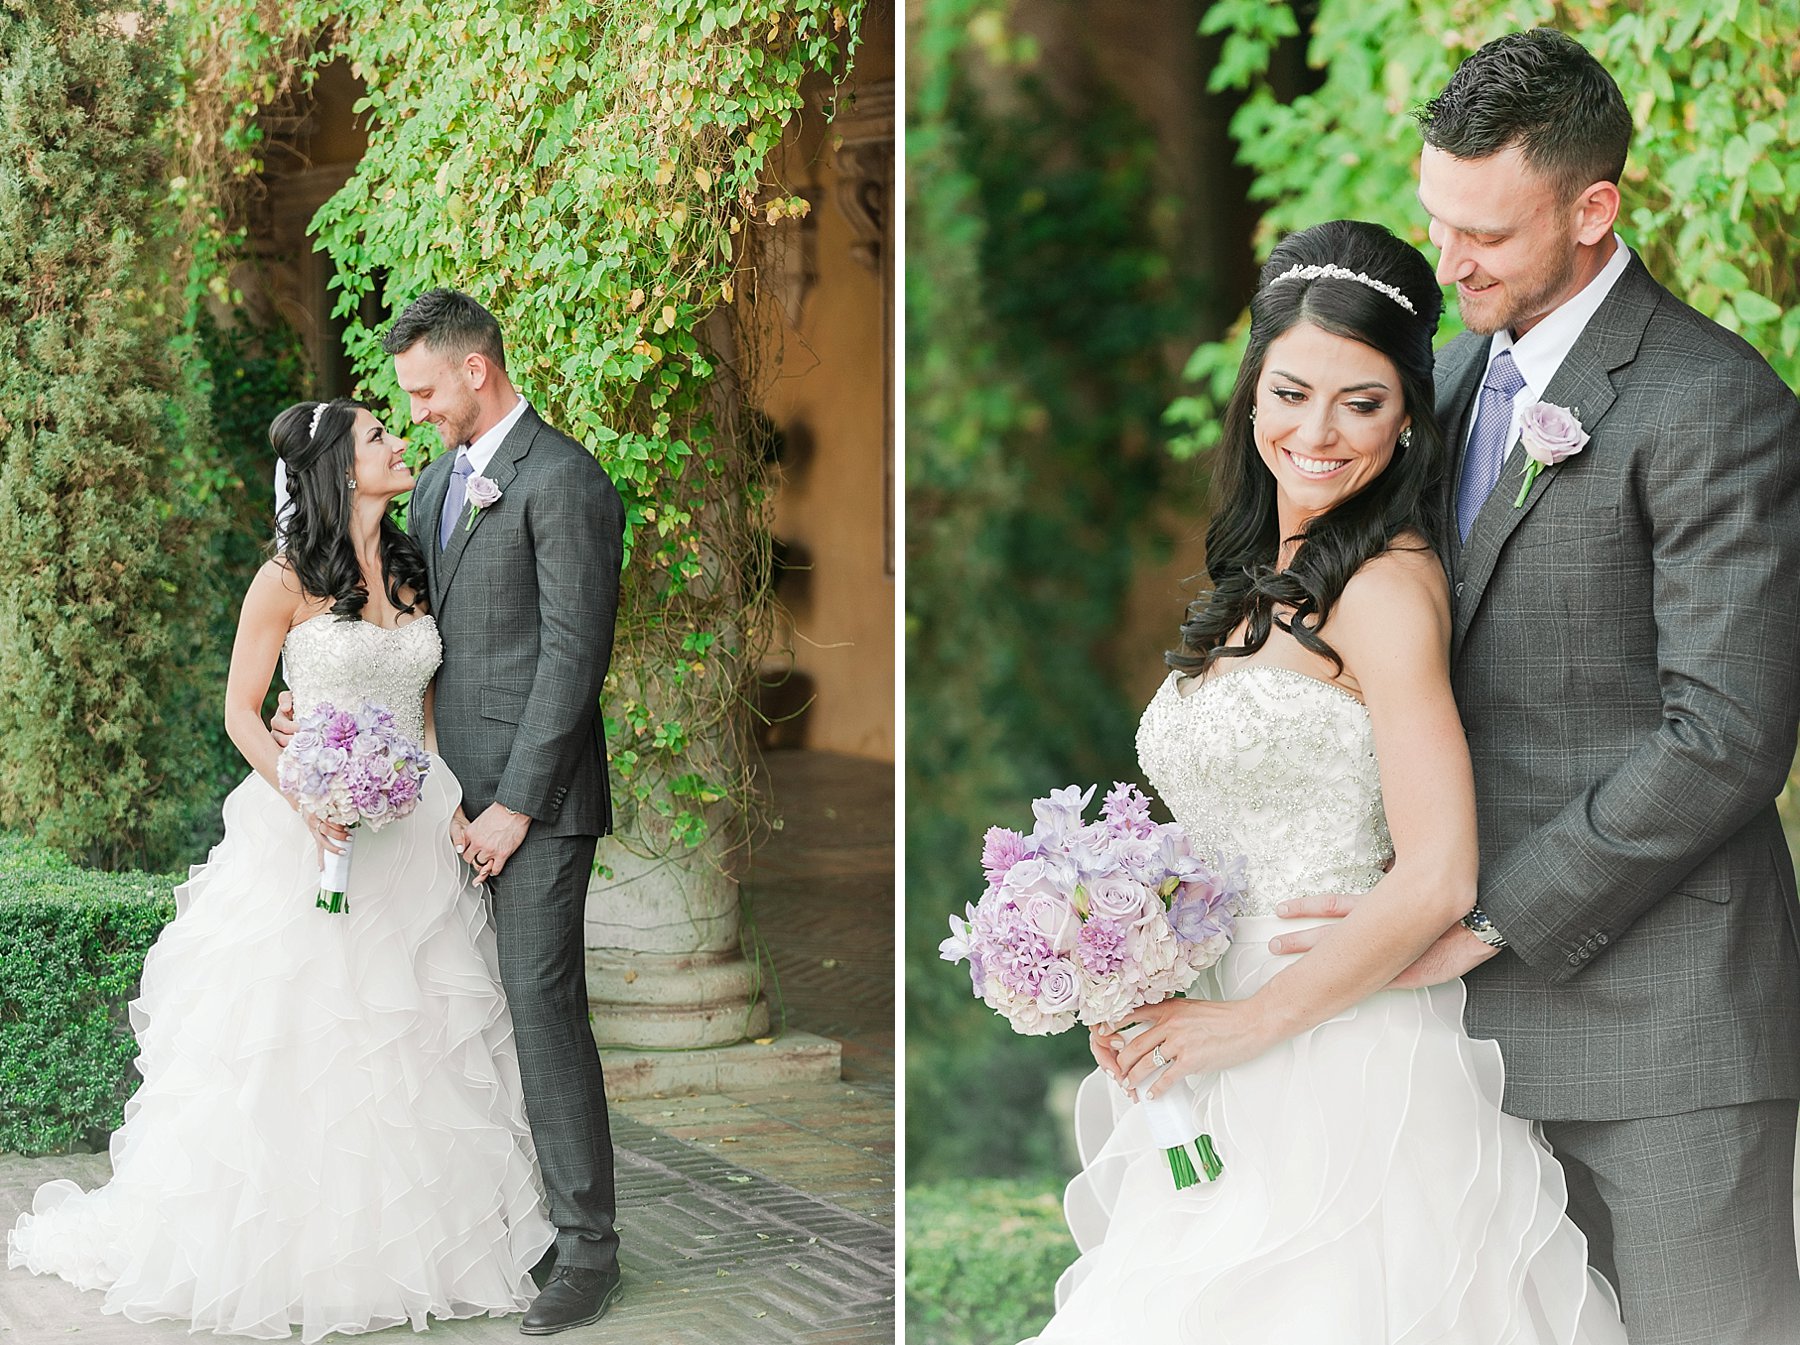 Villa Siena Middlebrooks Dell Wedding Bride Groom Romantic Smiling Phoenix Arizona Photo